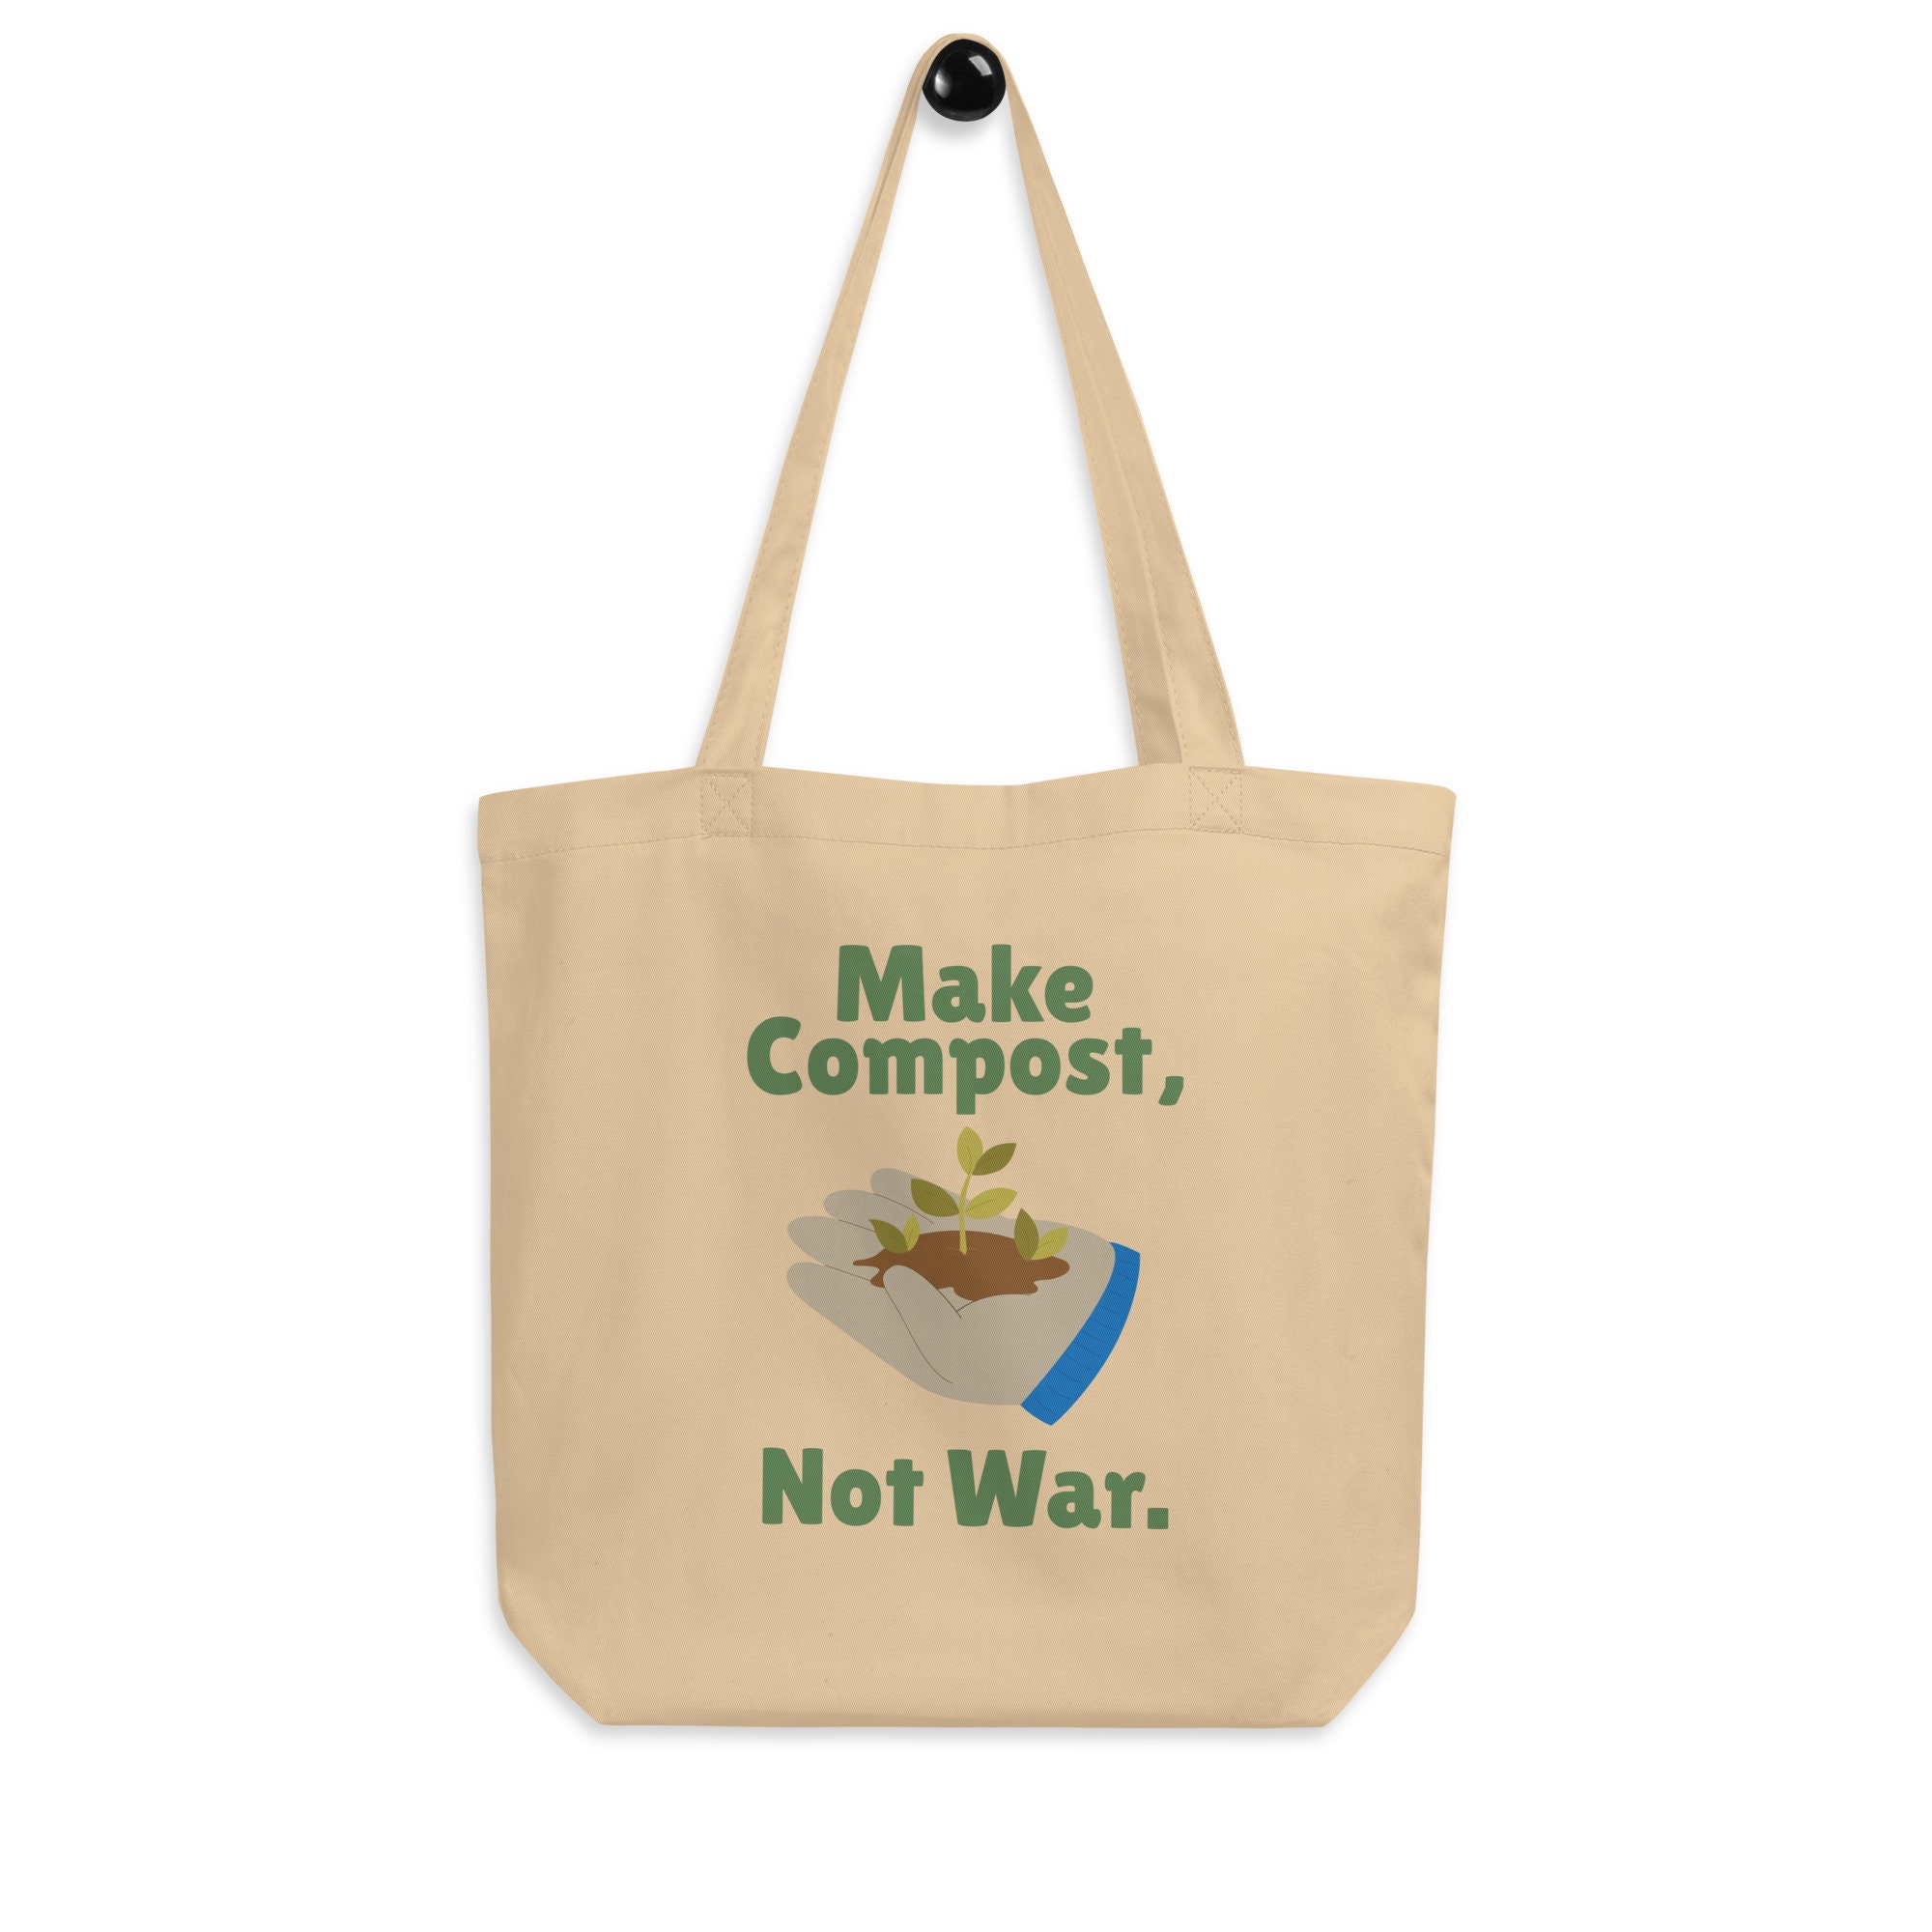 Reusable grocery bag repurposed into a grow bag. : r/gardening